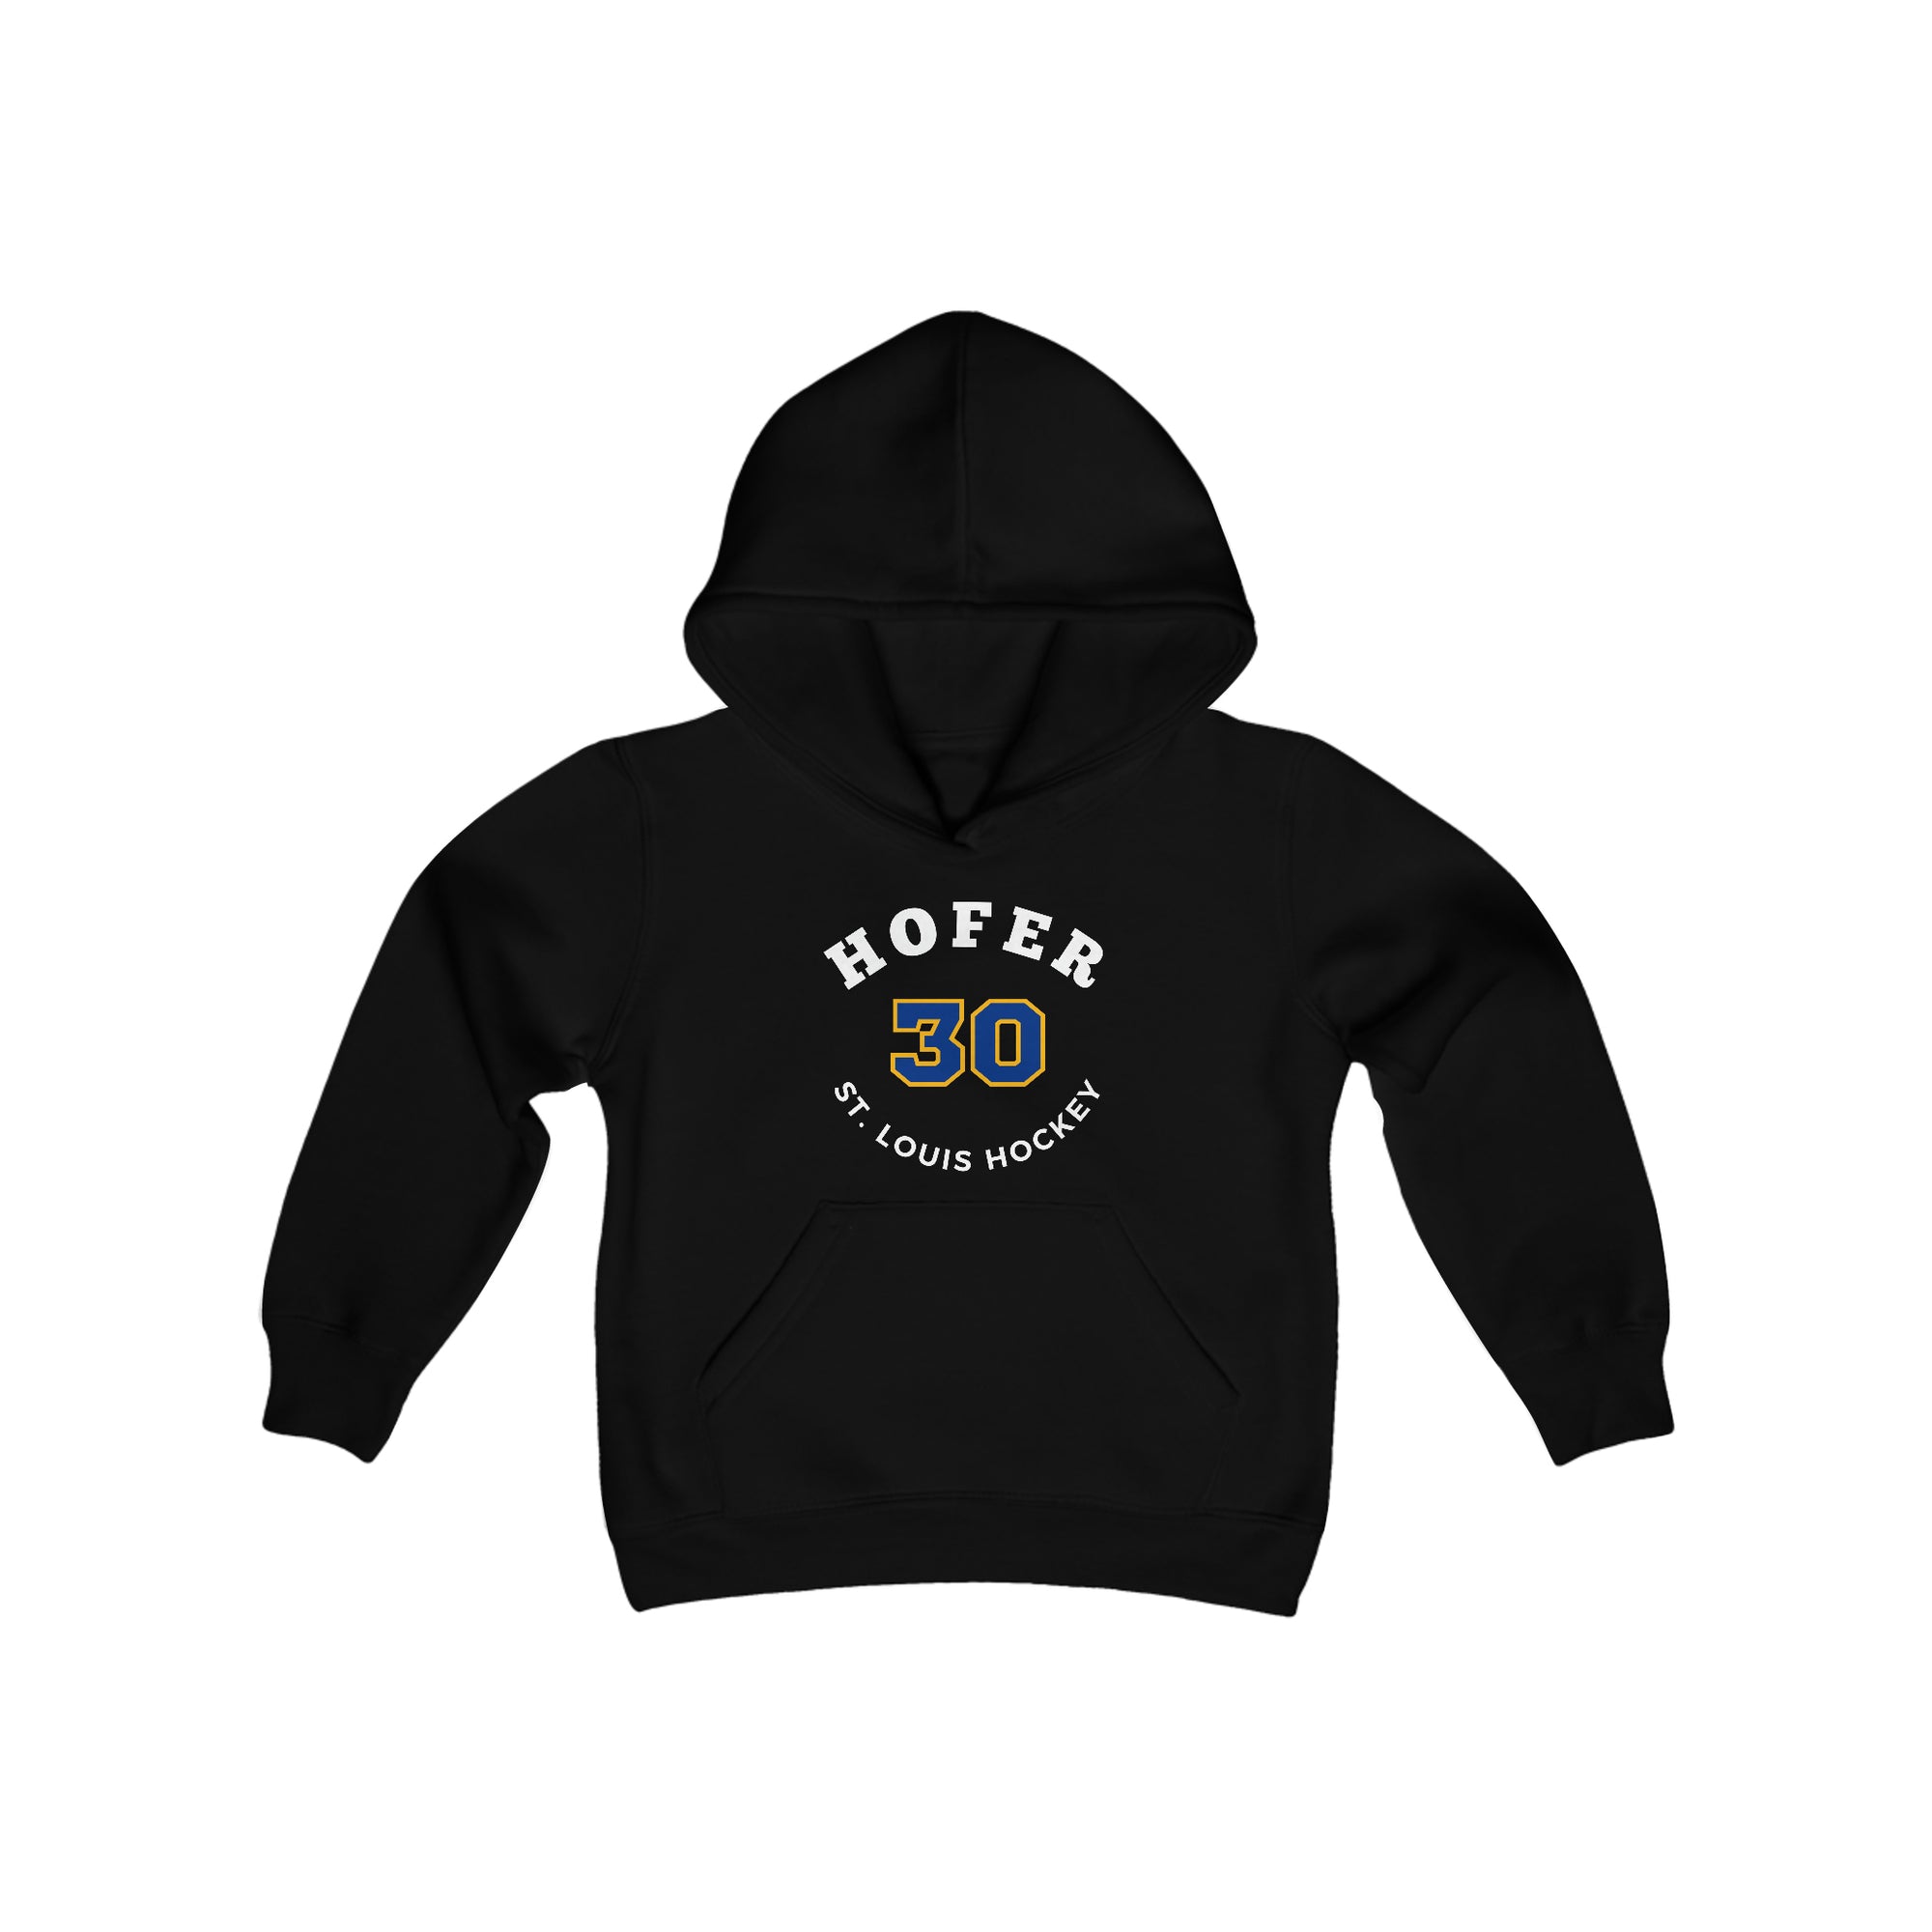 Hofer 30 St. Louis Hockey Number Arch Design Youth Hooded Sweatshirt